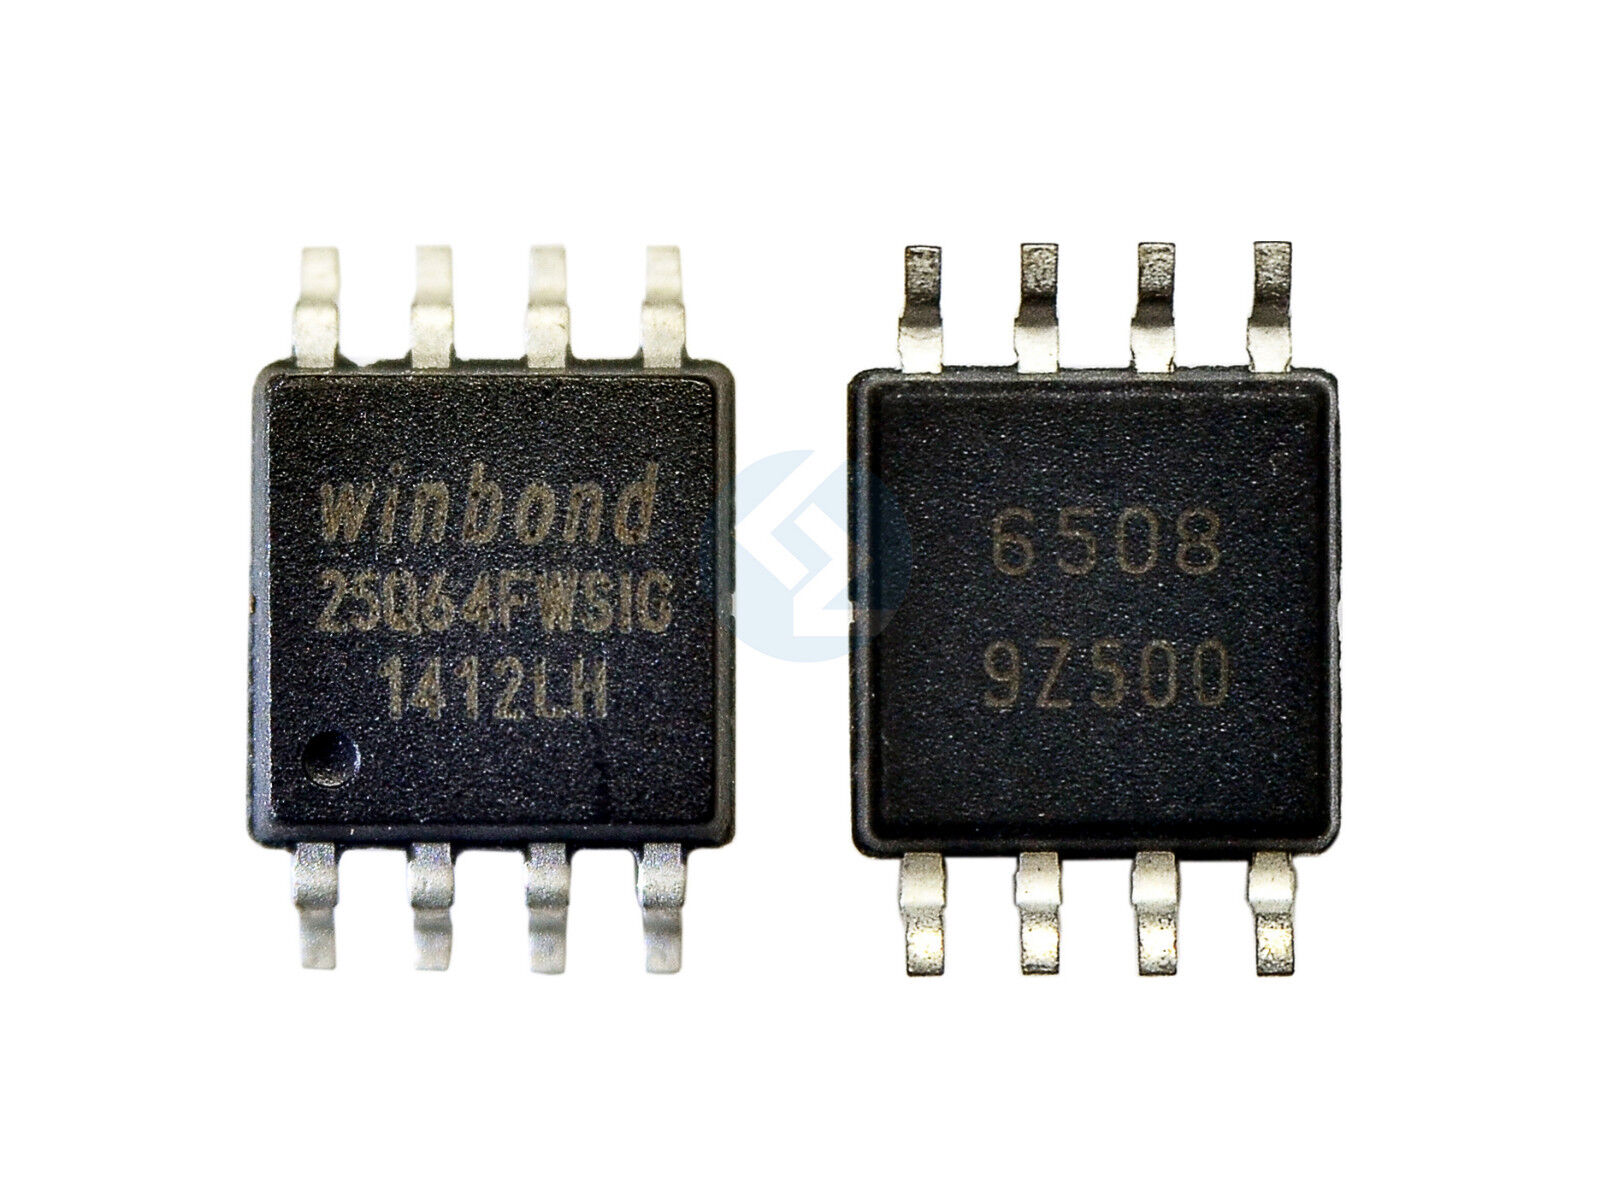 5PCS WINBOND W25Q64FWSIG 25Q64FWSIG SSOP 8pin Power IC Chip Chipset